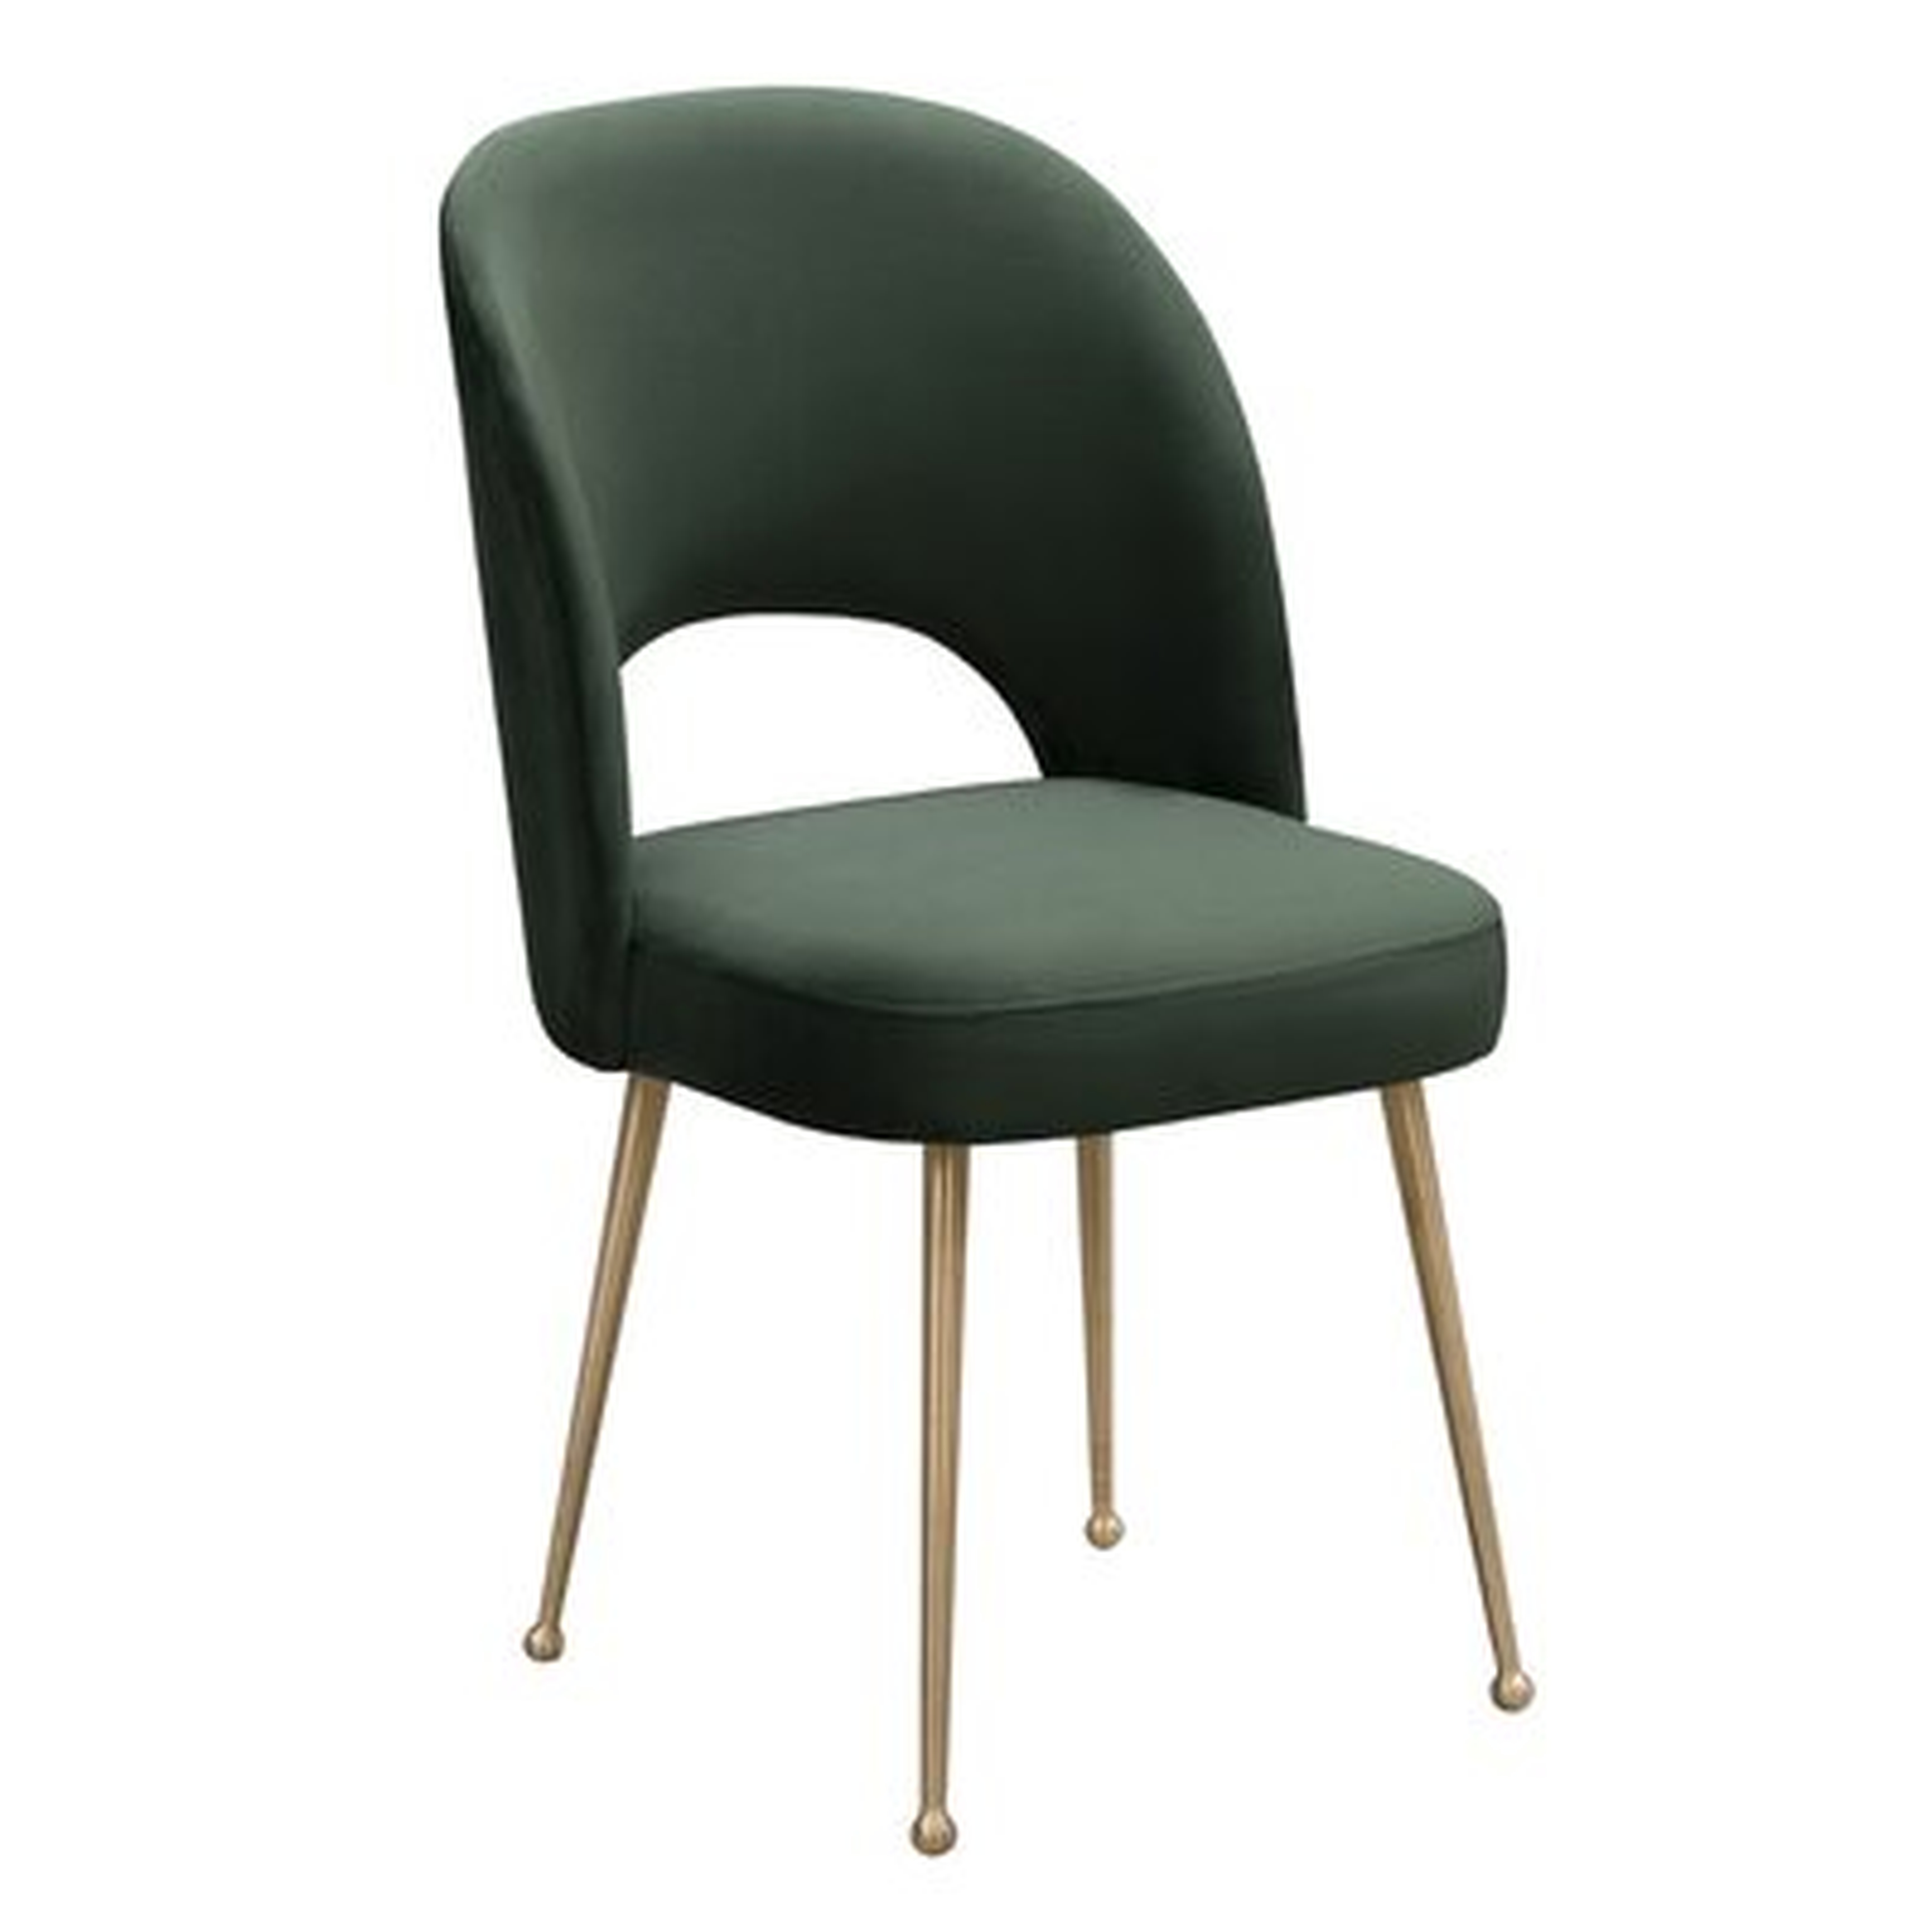 Saldana Upholstered Side Chair - Wayfair